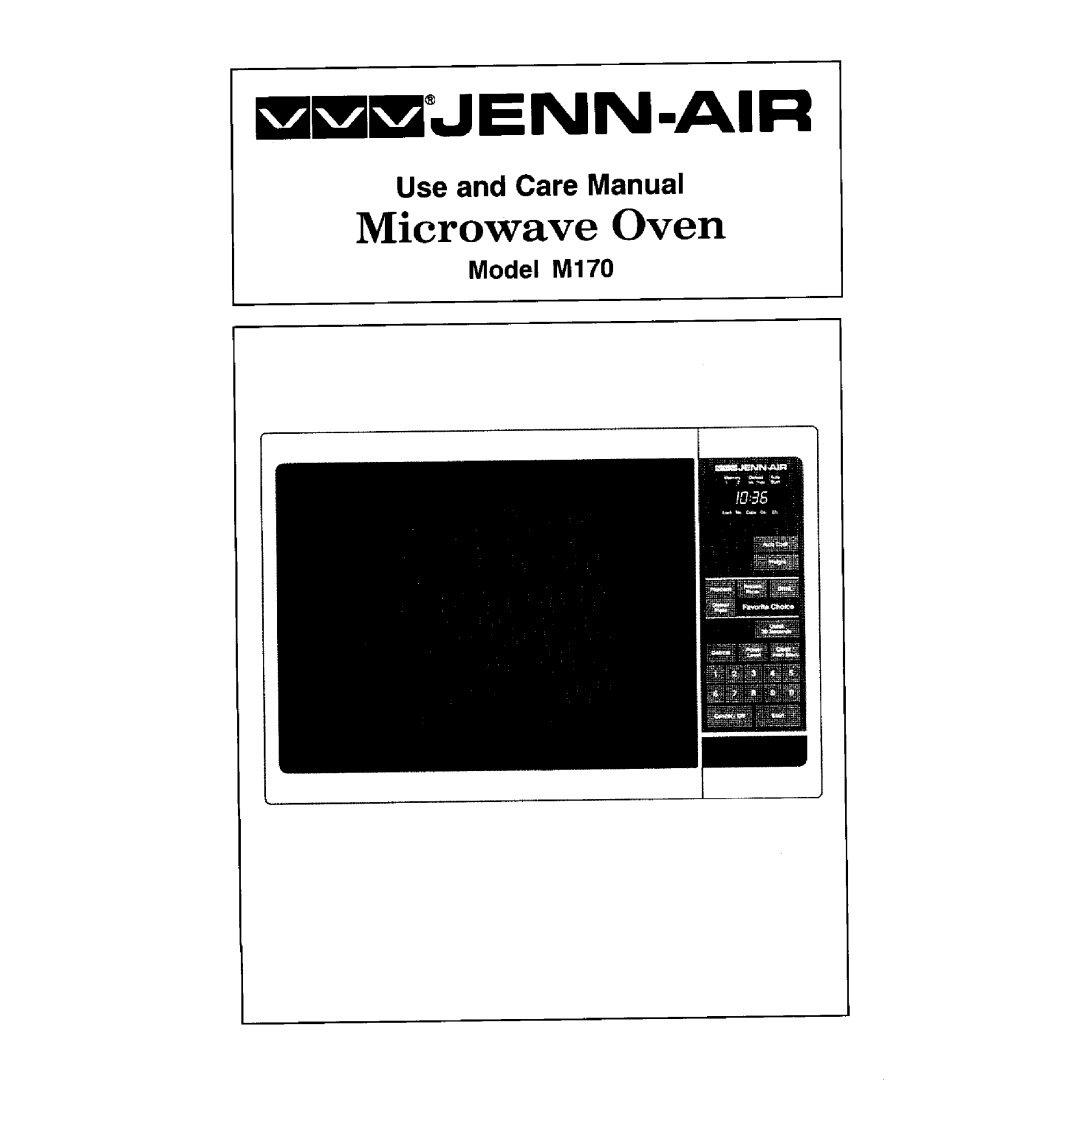 Jenn-Air manual mm/JENN.AIR, Microwave Oven, Use and Care Manual, Model M170 